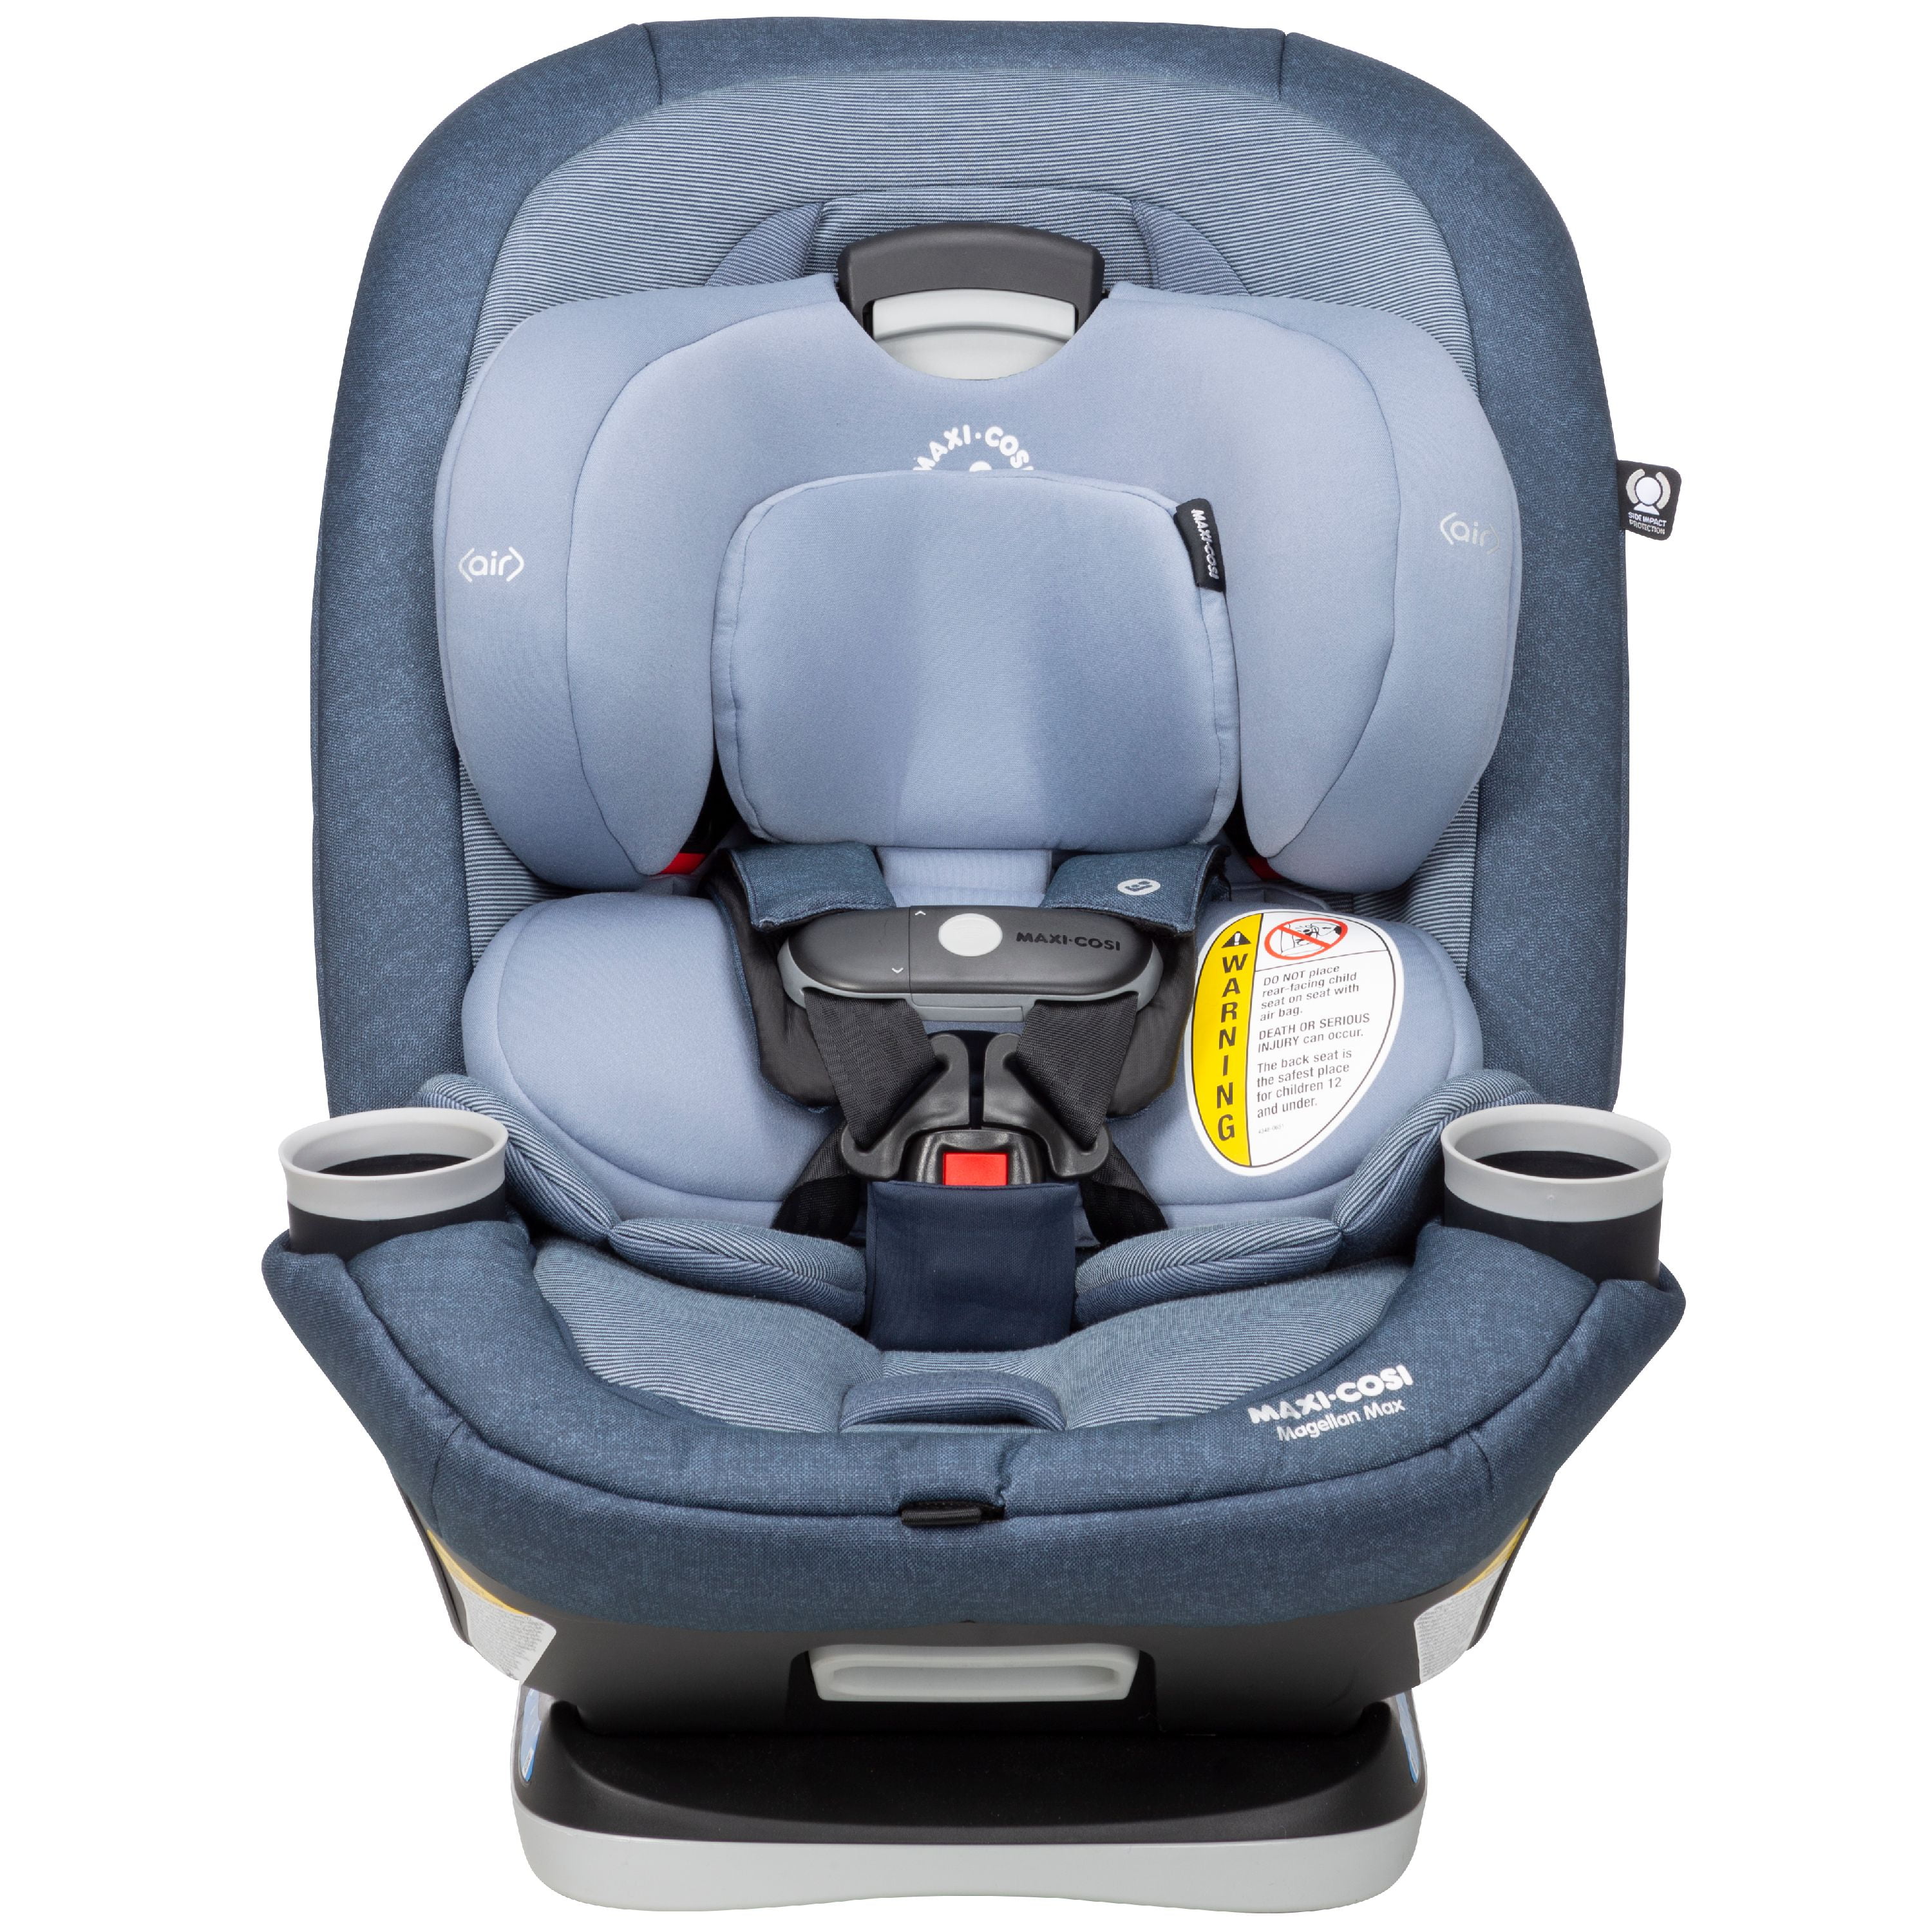 Safest Convertible Car Seat 2020 30 Best Convertible Car Seats With Safety Ratings Safe Convertible Car Seats